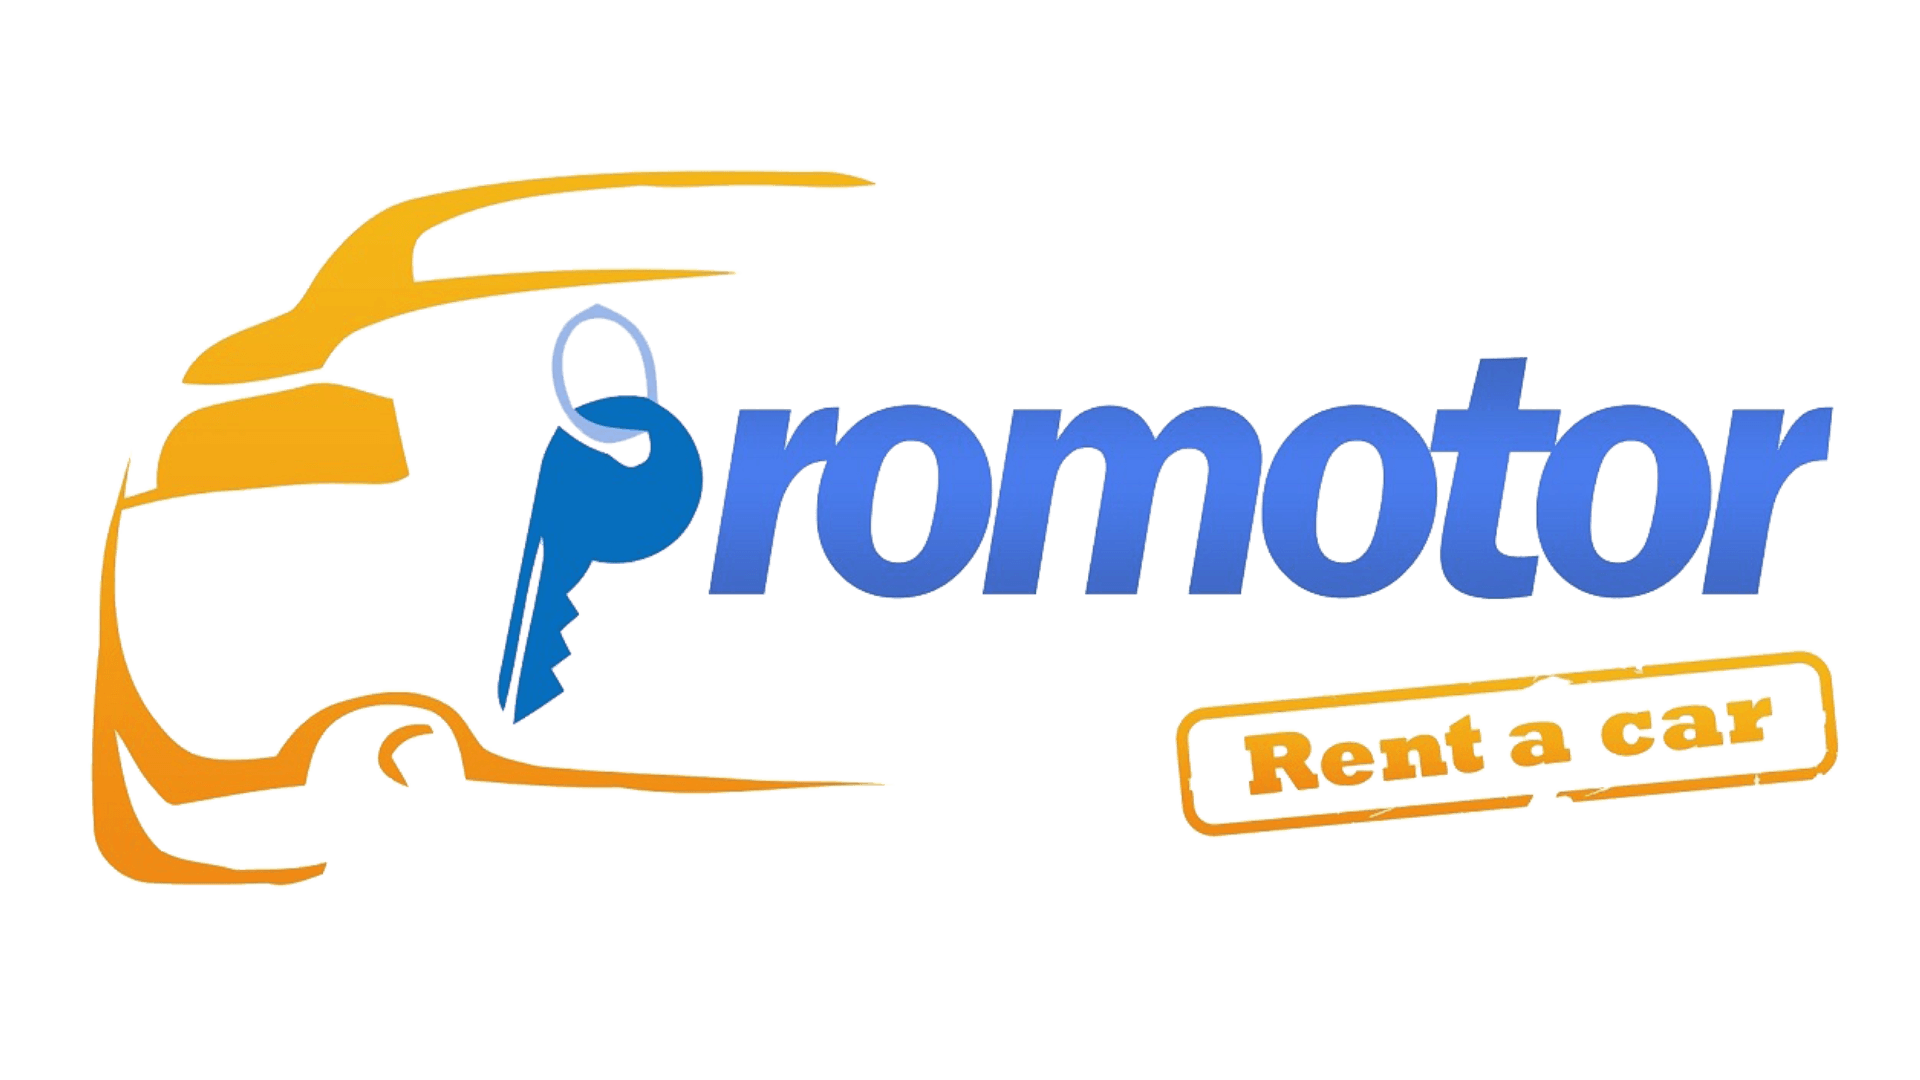 Romanian Car Logo - About Promotor Rent a Car car rental in Romania